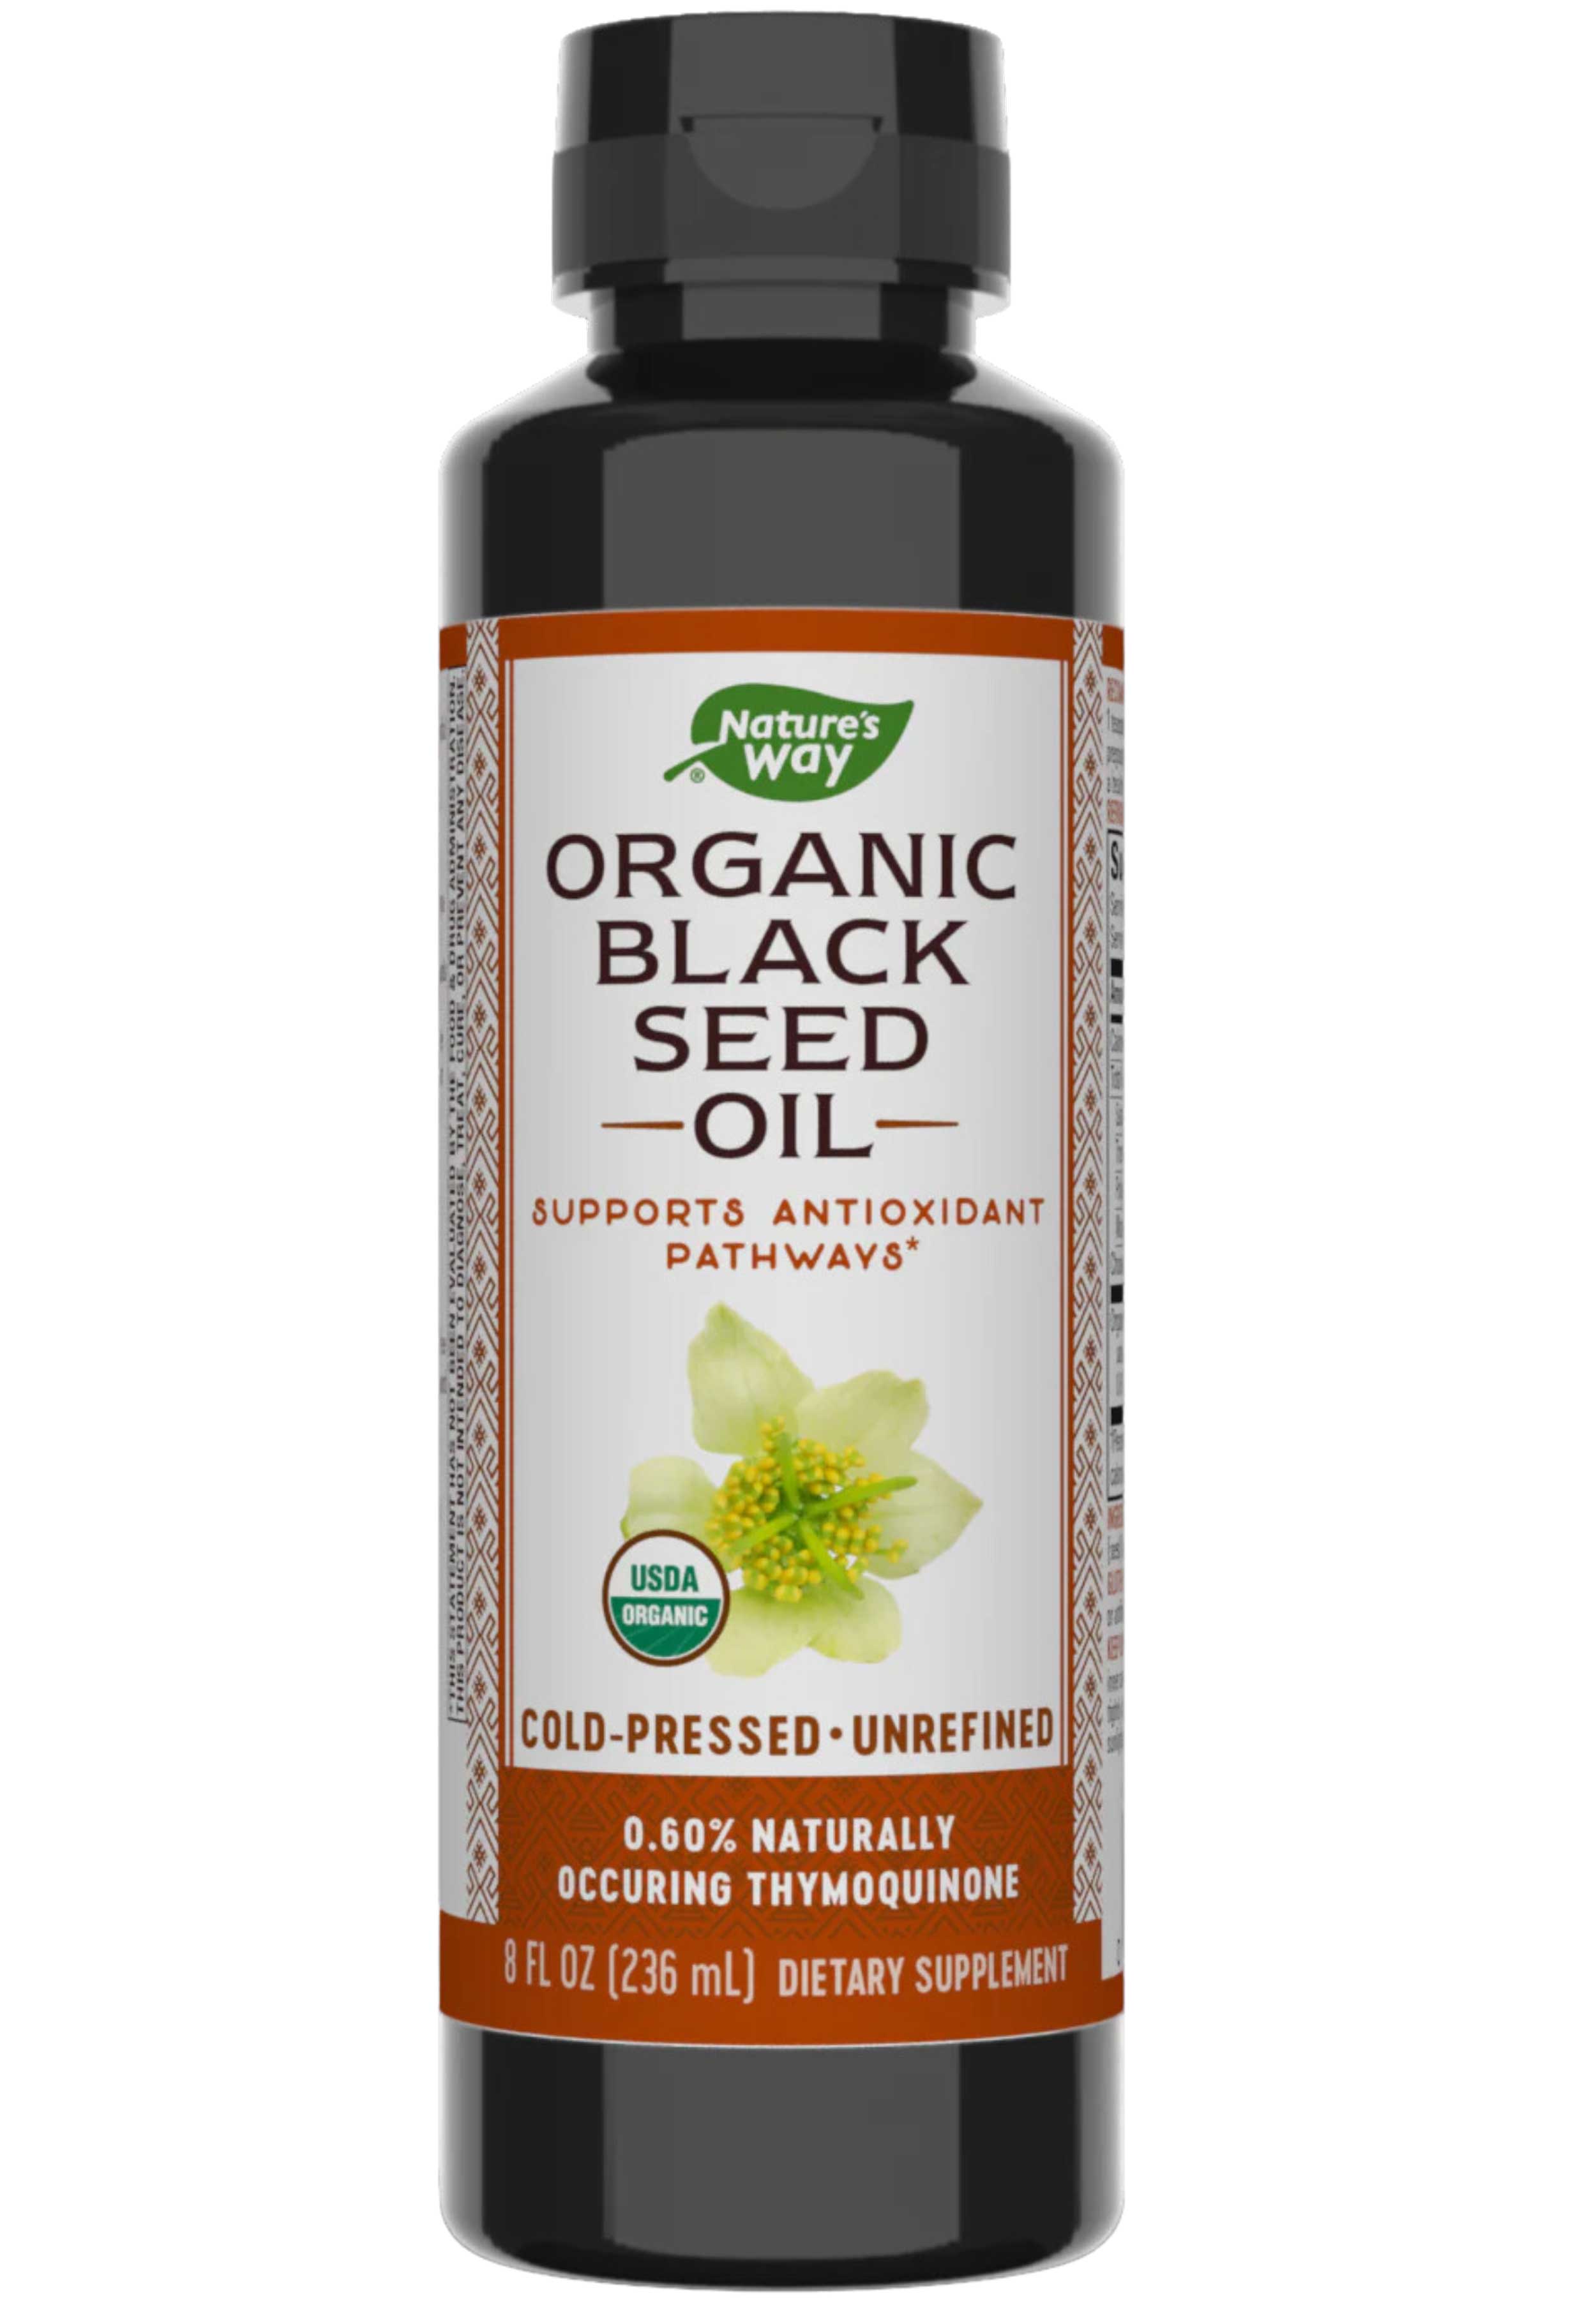 Nature's Way Organic Black Seed Oil